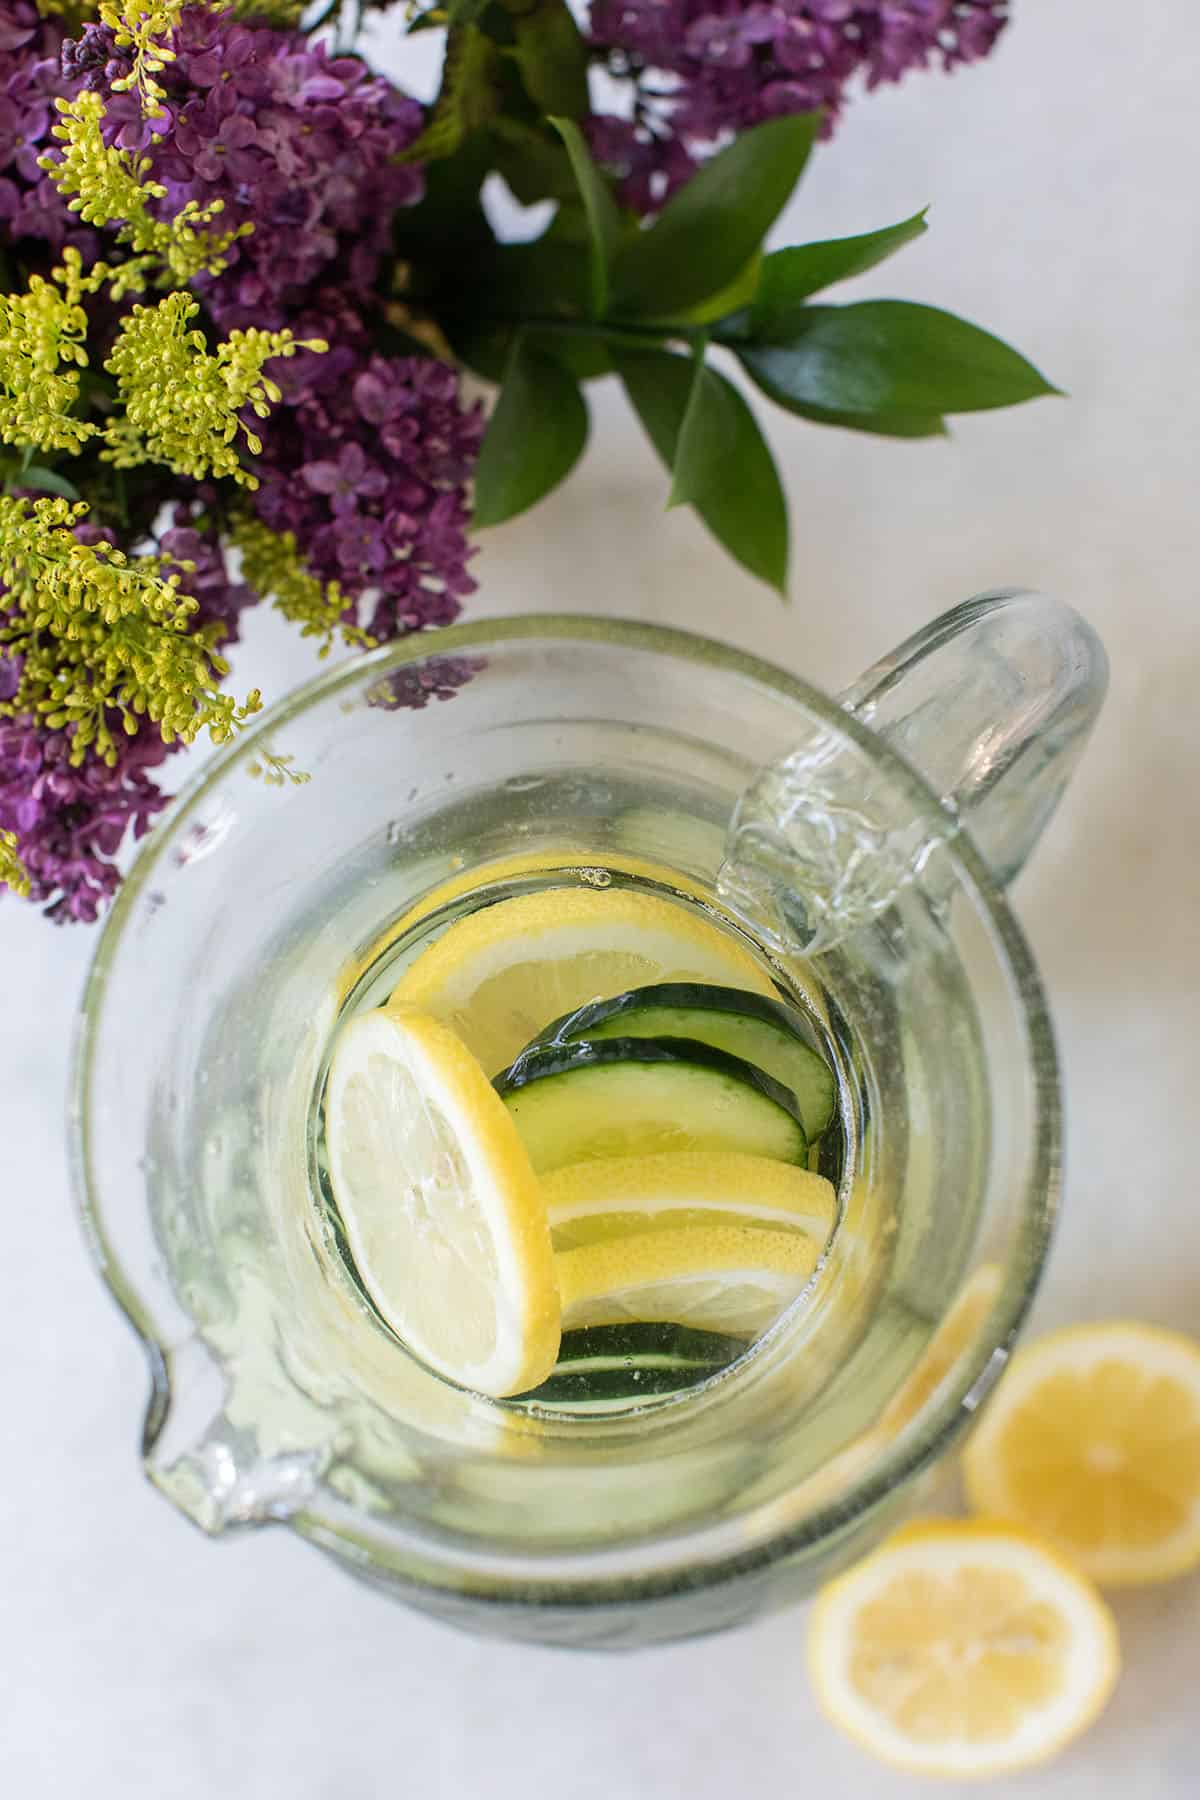 Lemon cucumber water in a pitcher.